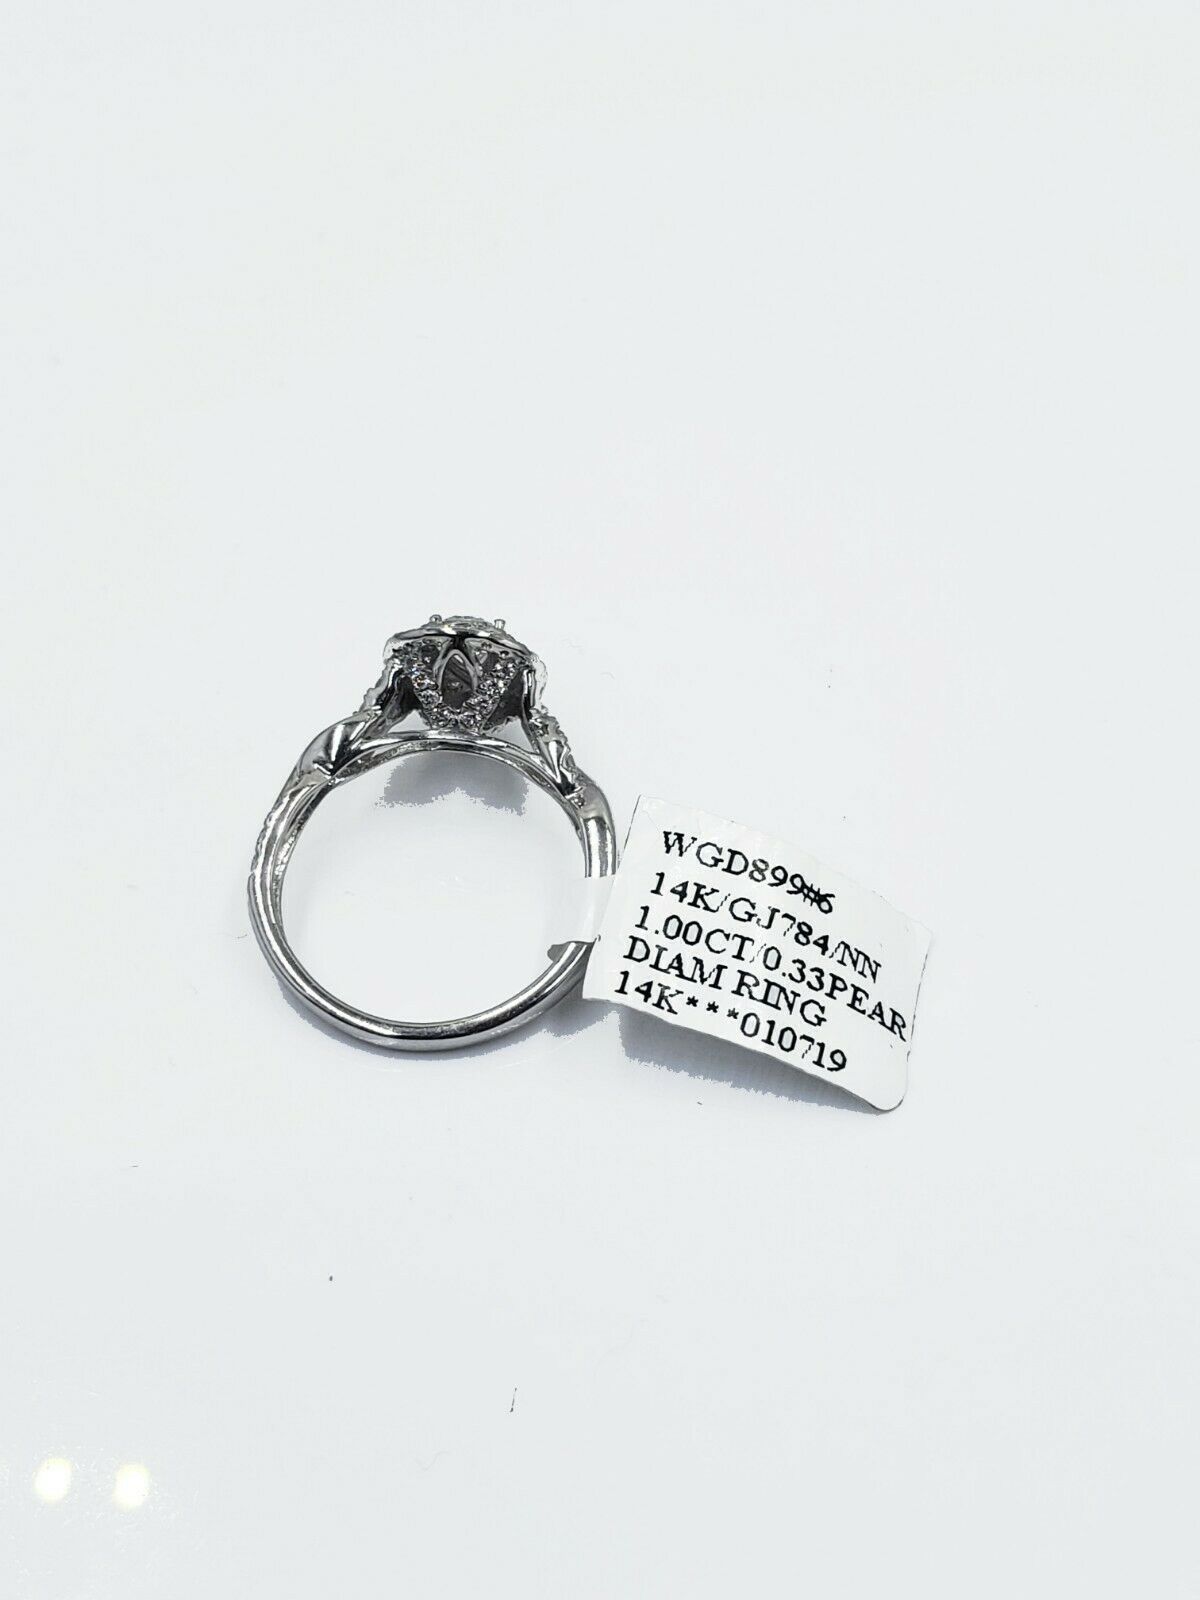 14k White Gold 1CT Diamond Ladies Ring Tear Drop Pear Shaped Wedding Anniversary